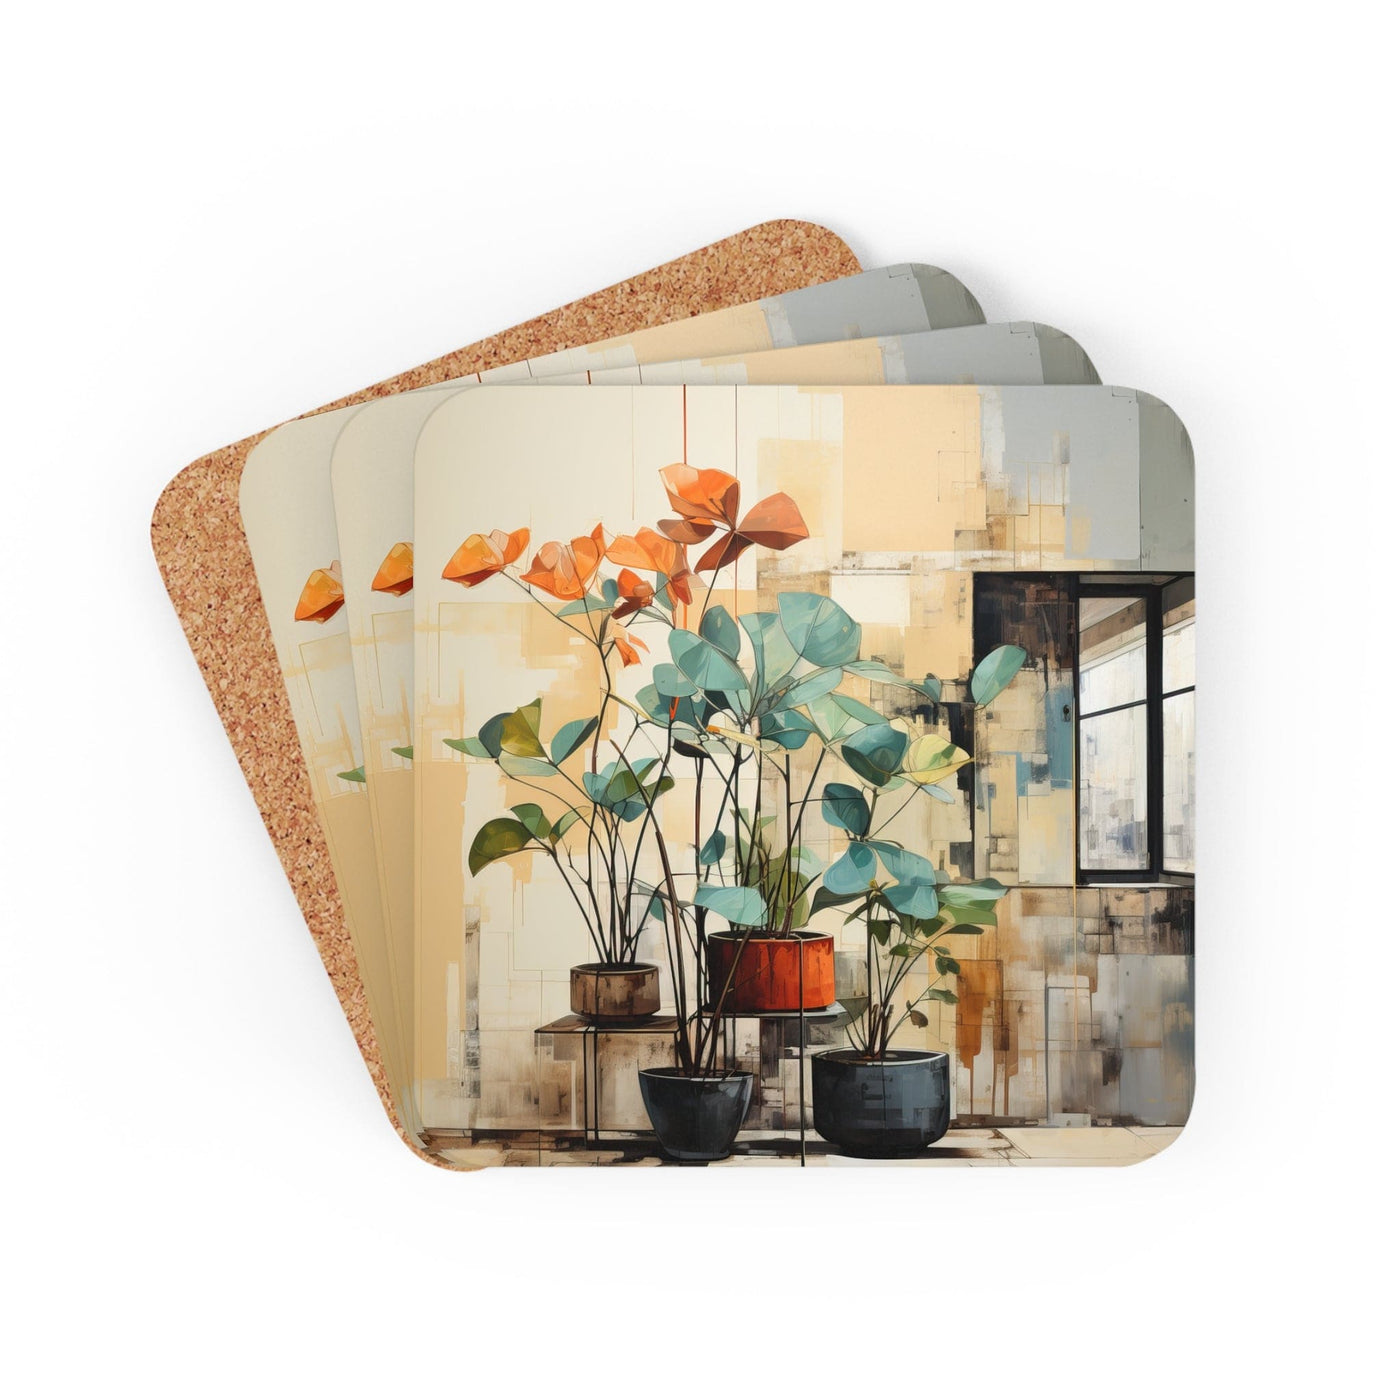 Coaster Set Of 4 For Drinks Rustic Botanical Plants - Decorative | Coasters